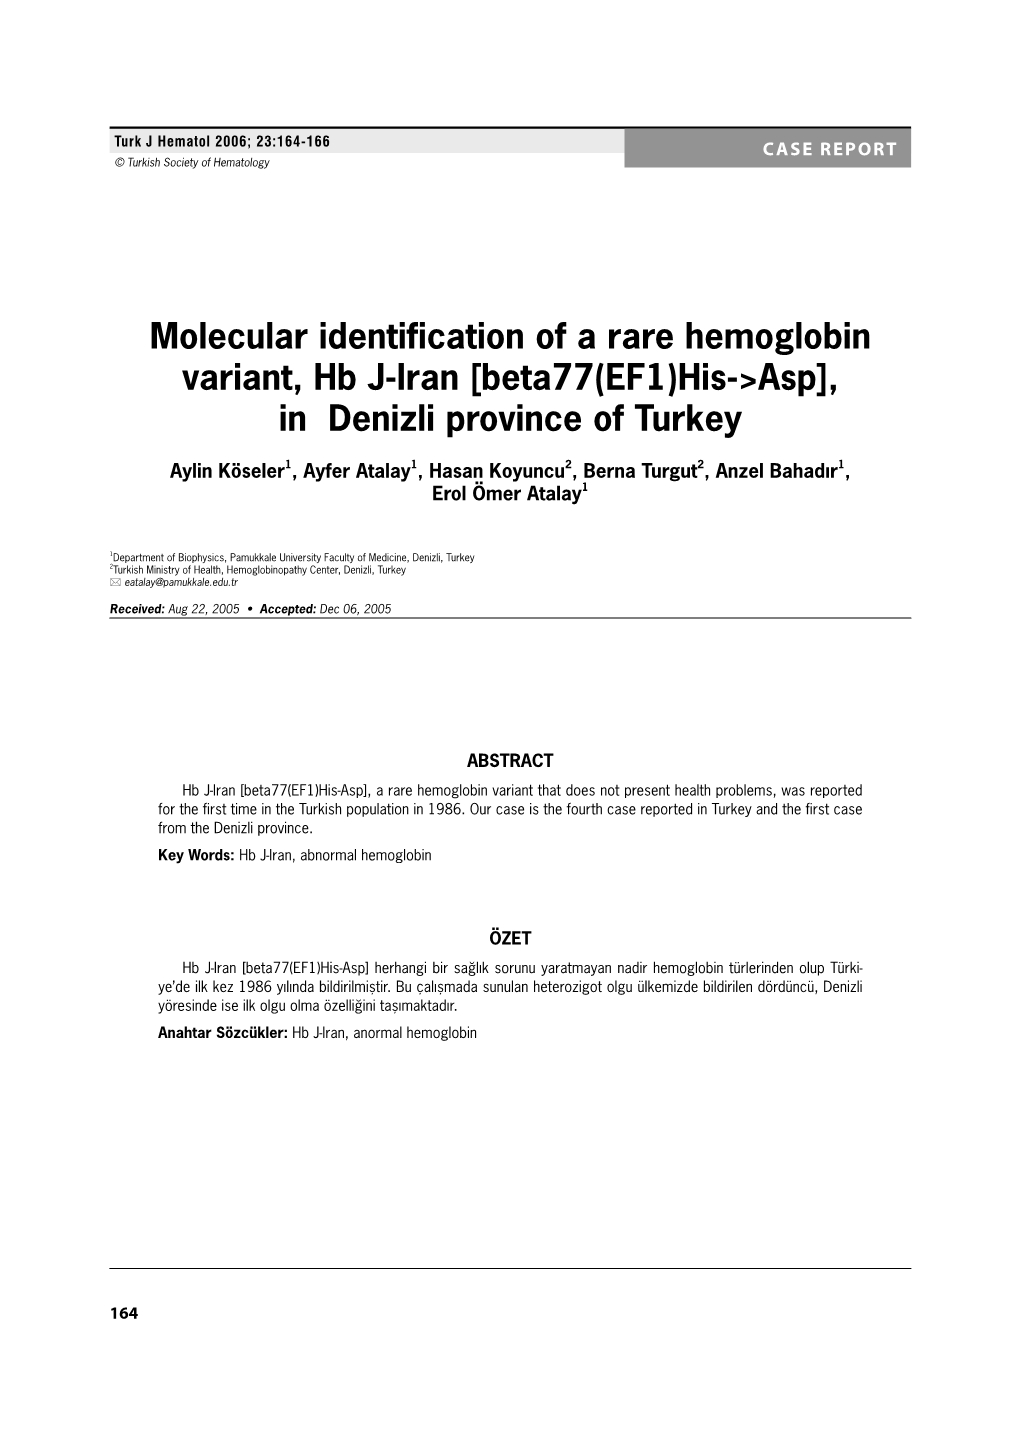 Molecular Identification of a Rare Hemoglobin Variant, Hb J-Iran [Beta77(EF1)His->Asp], in Denizli Province of Turkey